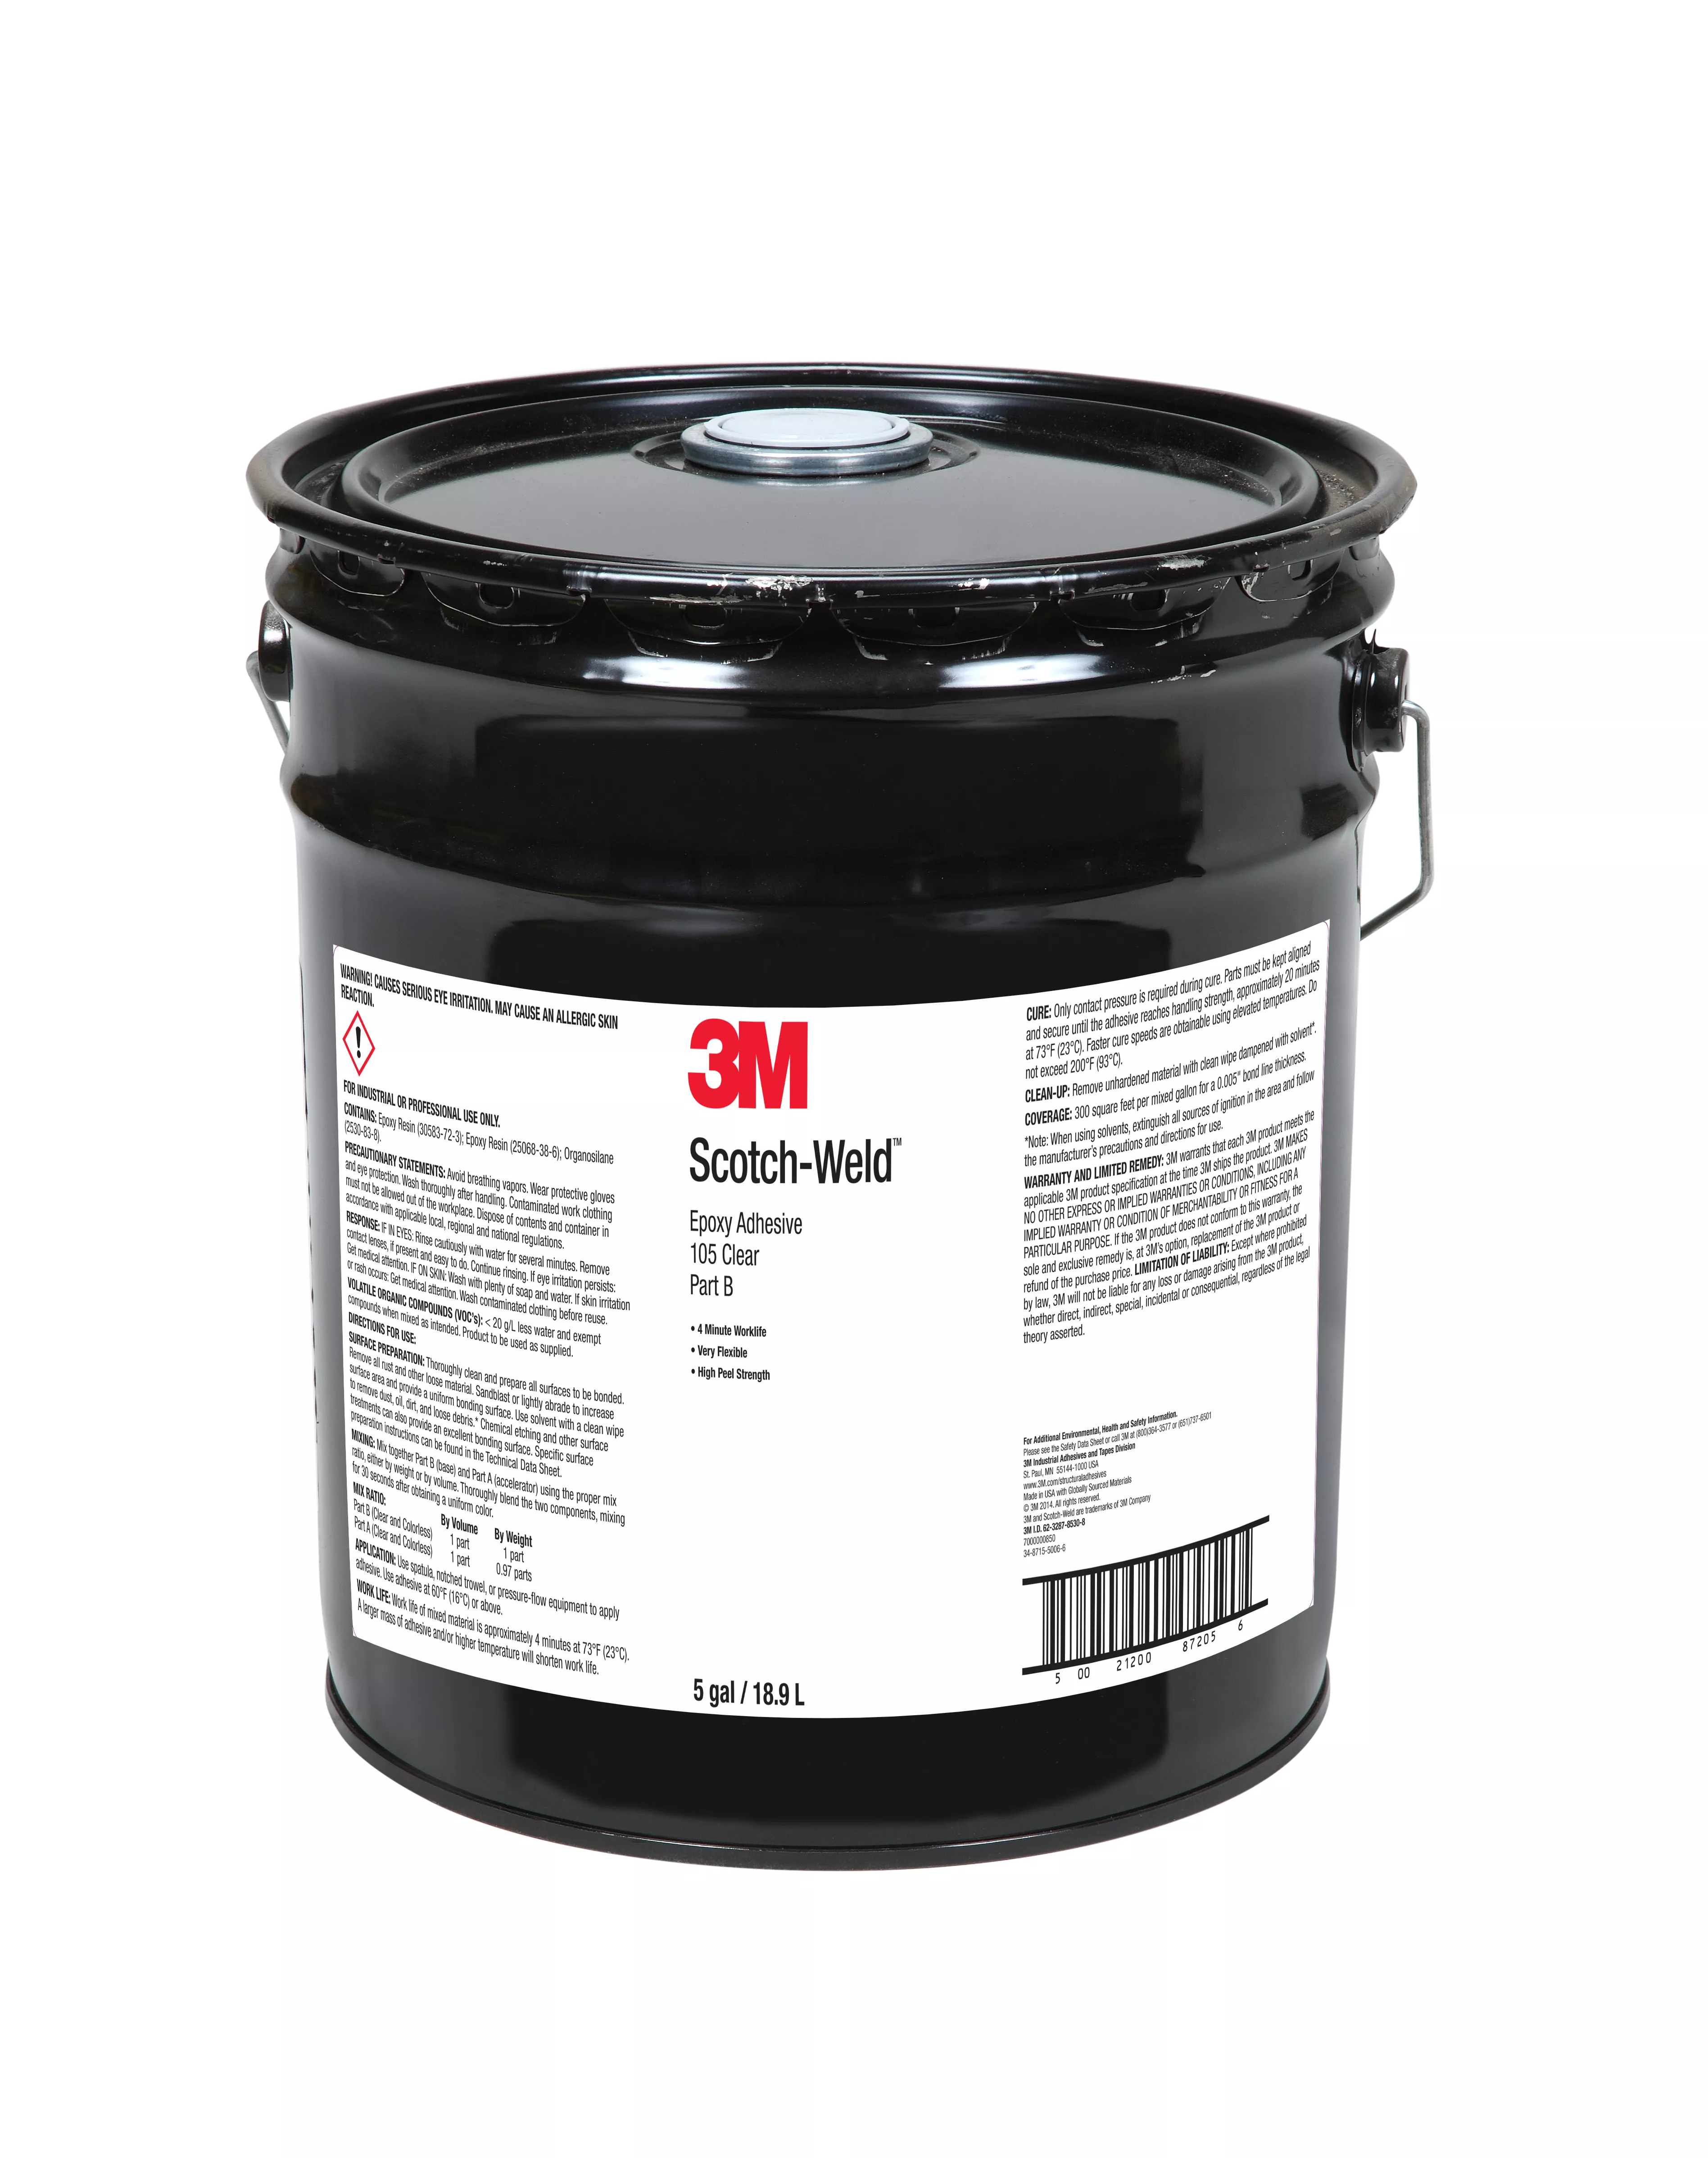 3M™ Scotch-Weld™ Epoxy Adhesive 105, Clear, Part B, 5 Gallon (Pail),
Drum